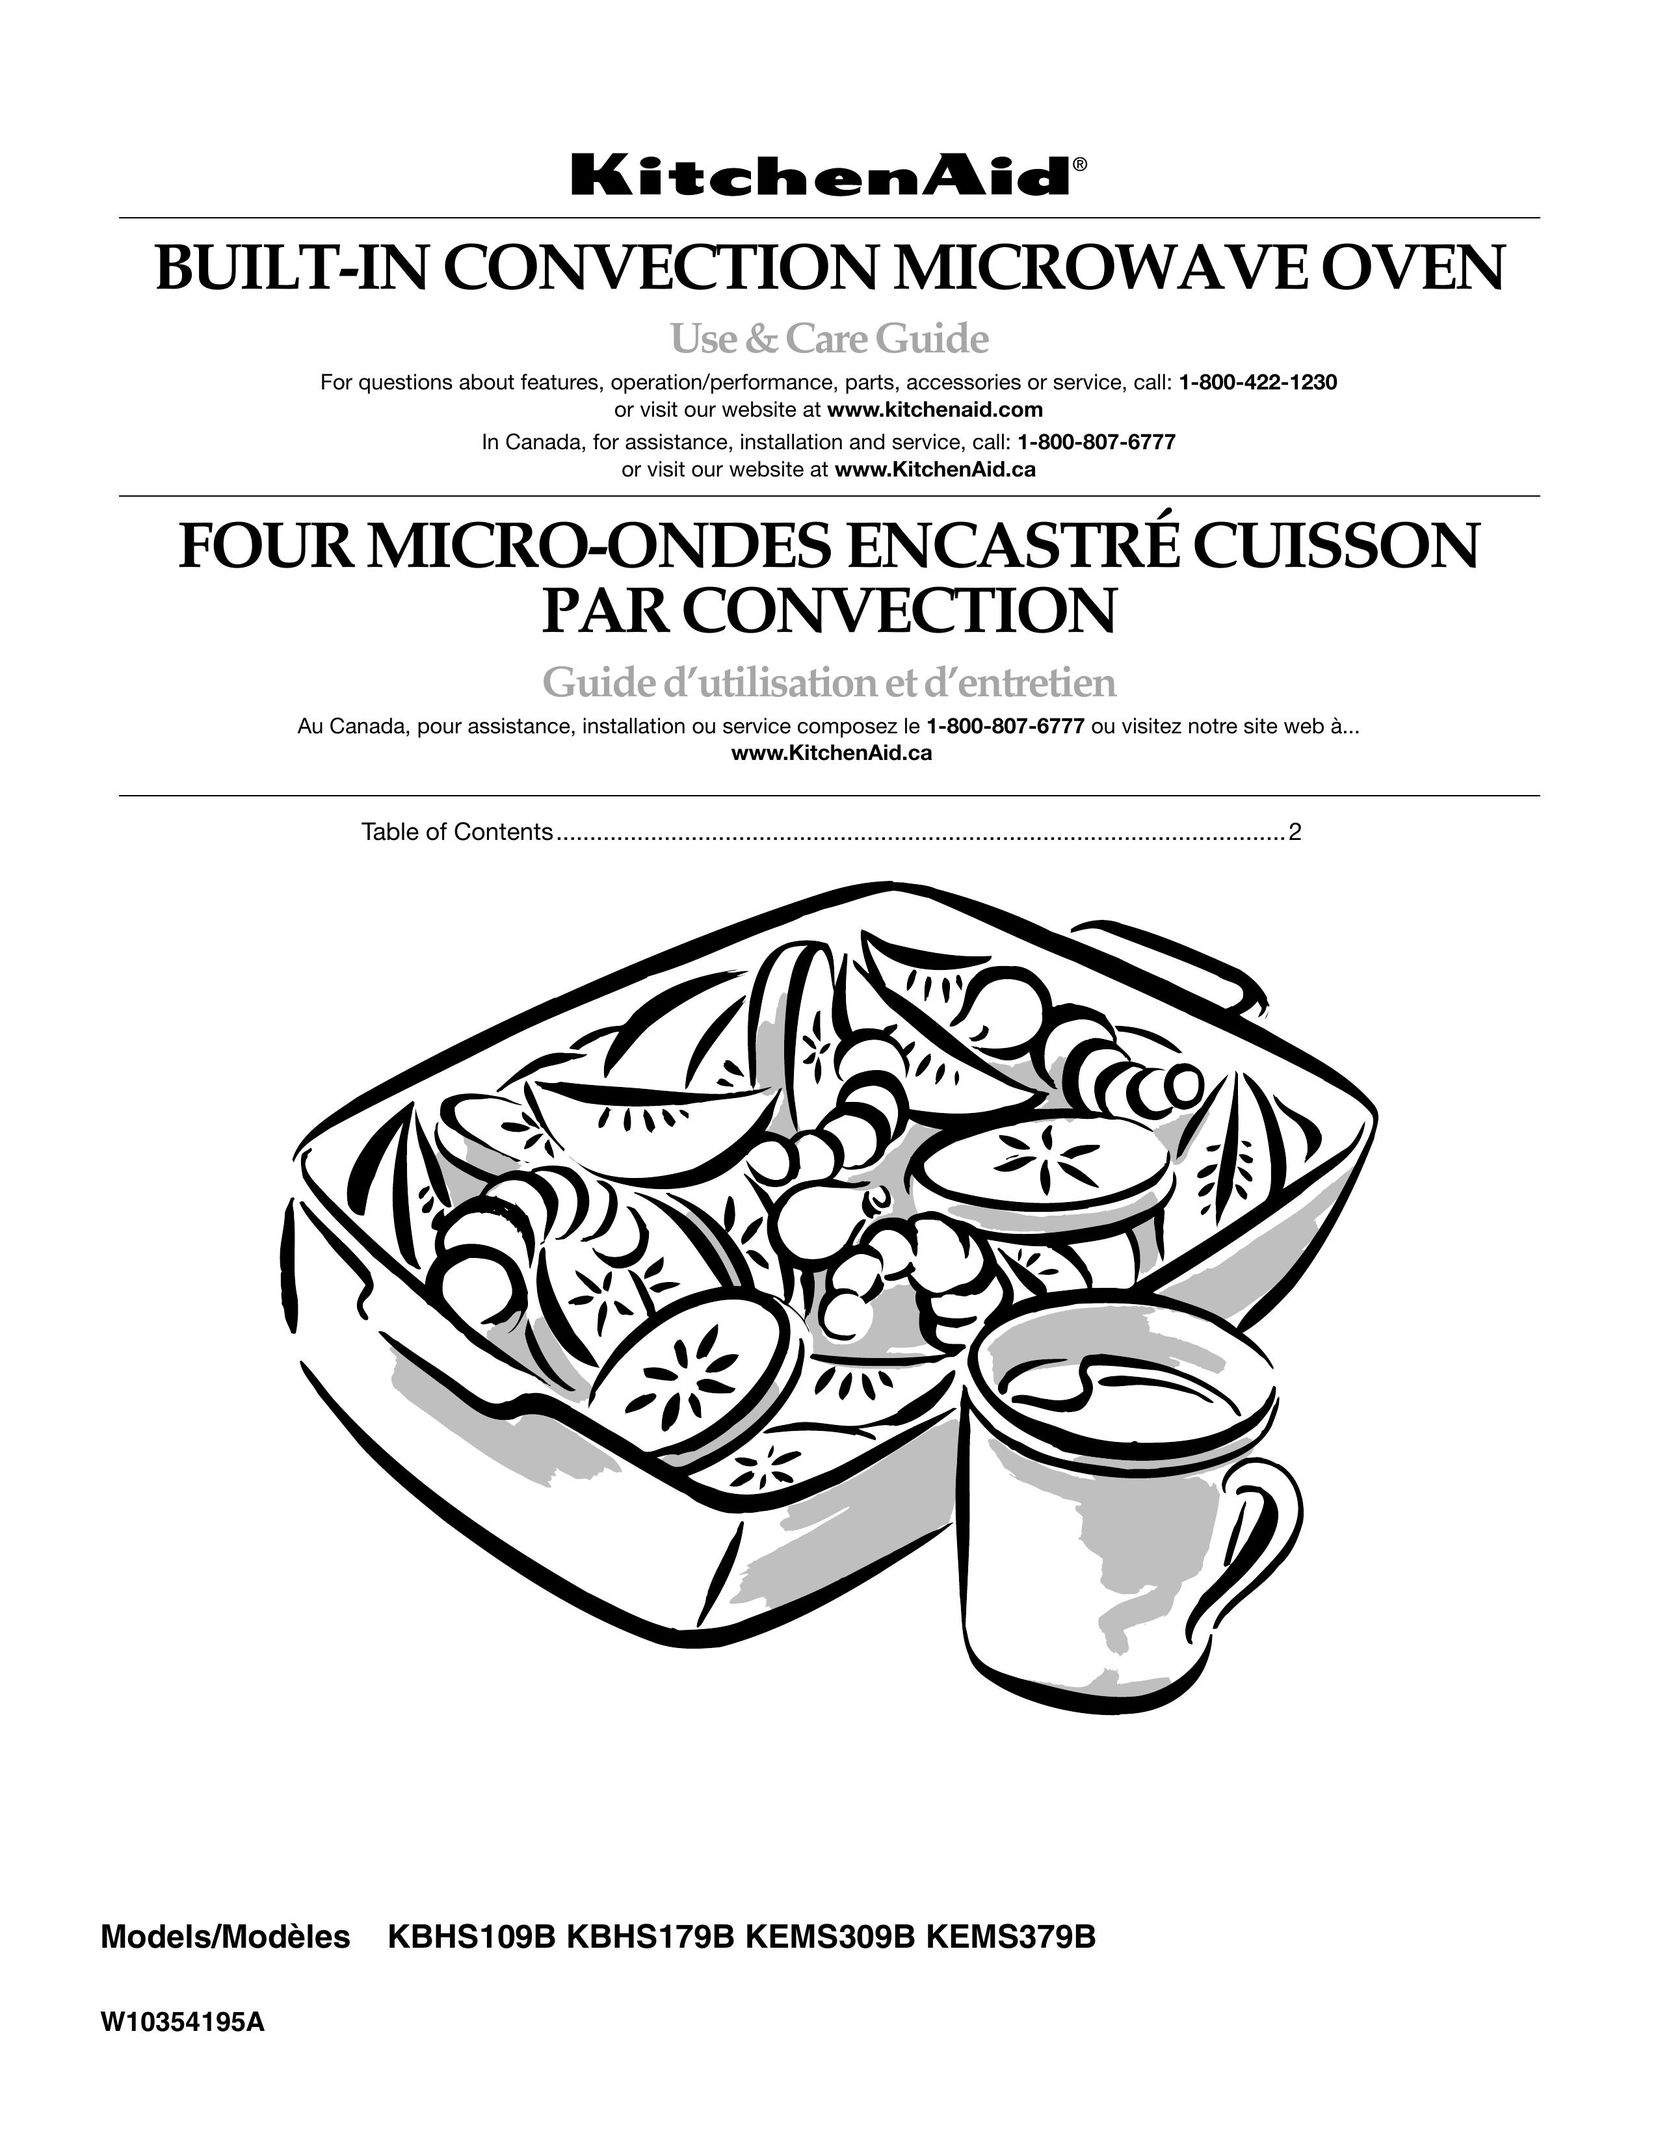 KitchenAid KBHS179B Microwave Oven User Manual